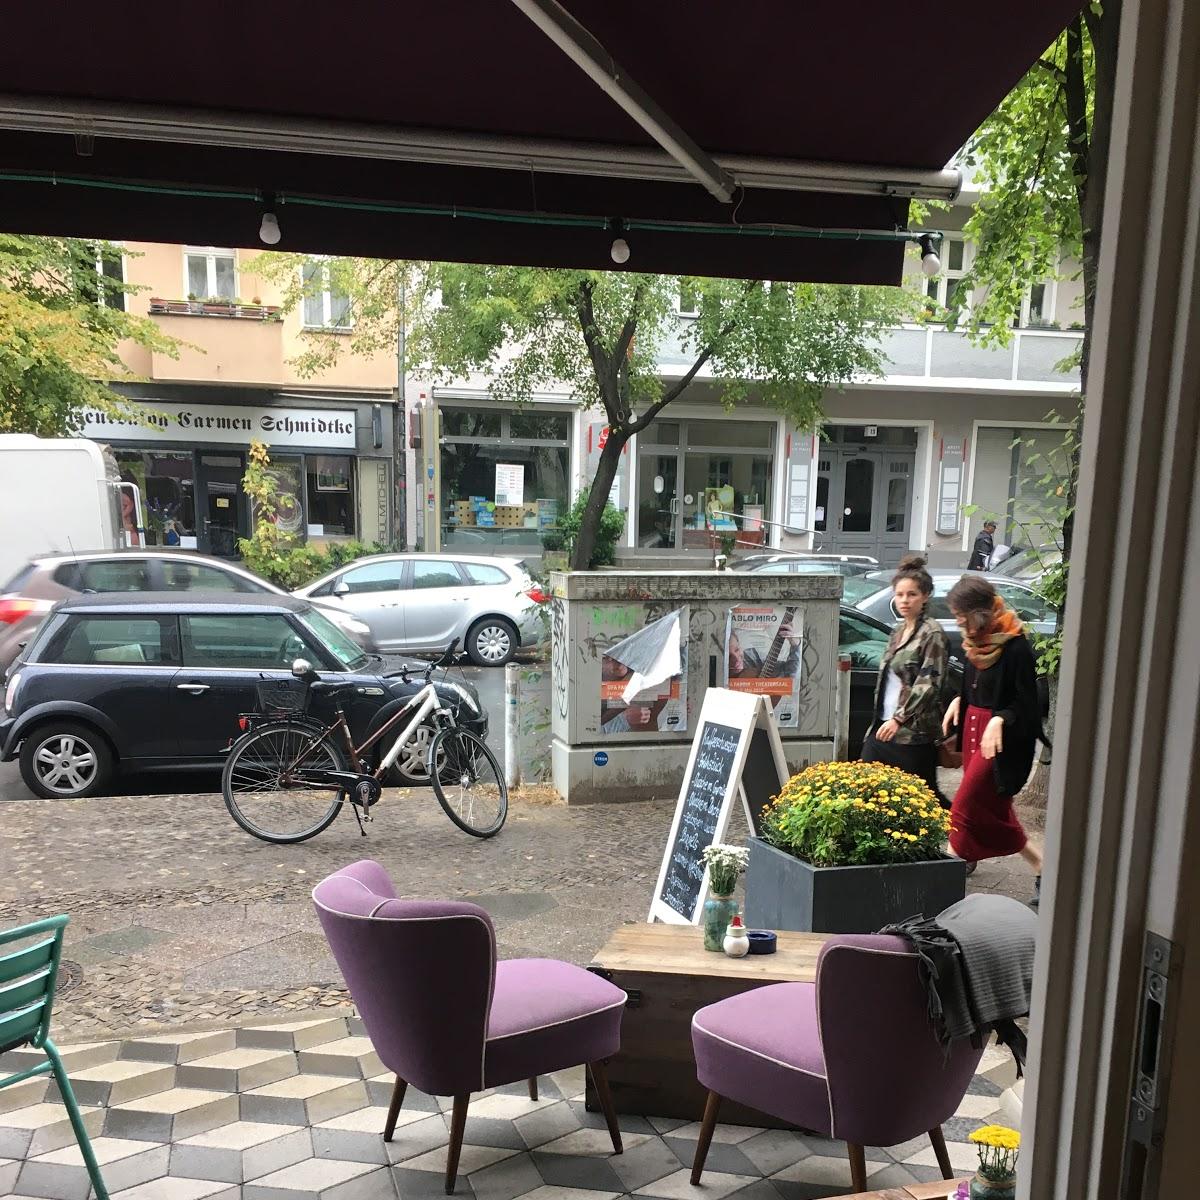 Restaurant "Kaffeeschwestern Cafe" in Berlin